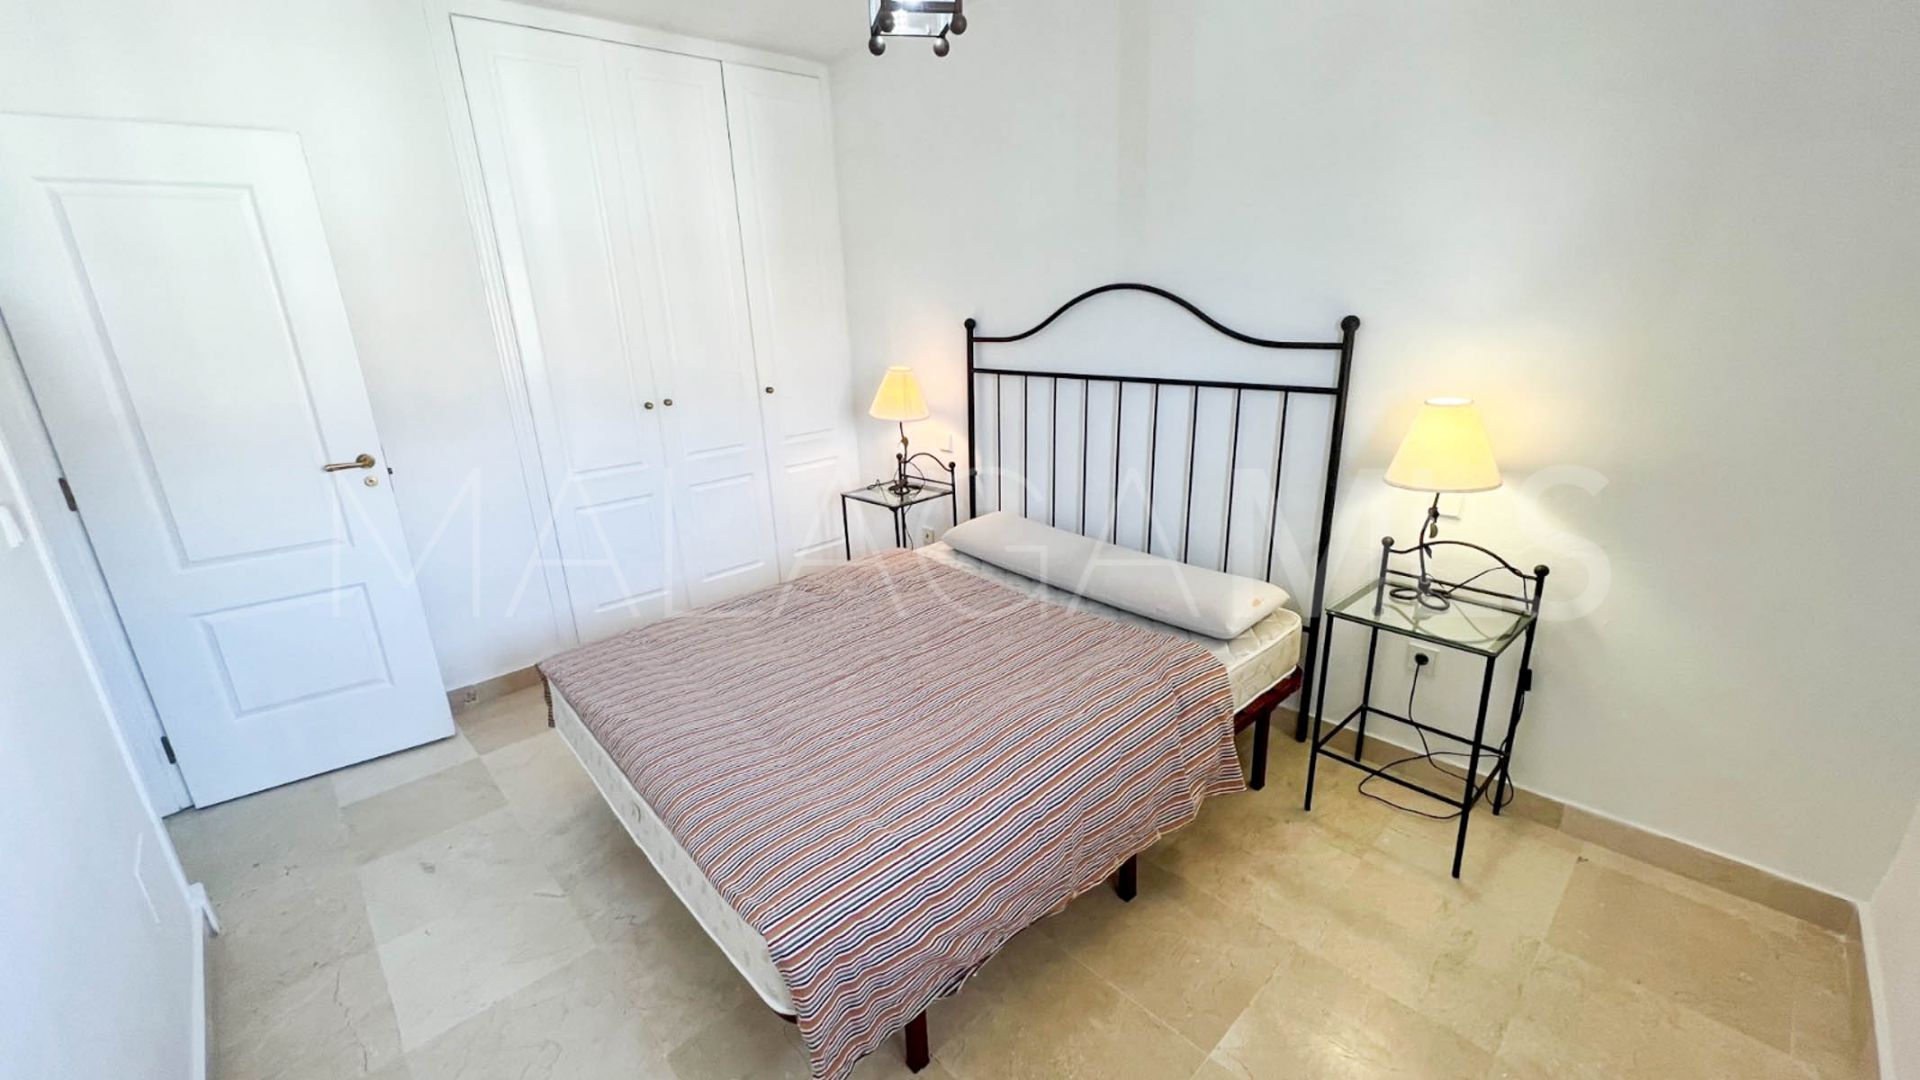 Apartment for sale in La Noria III with 3 bedrooms